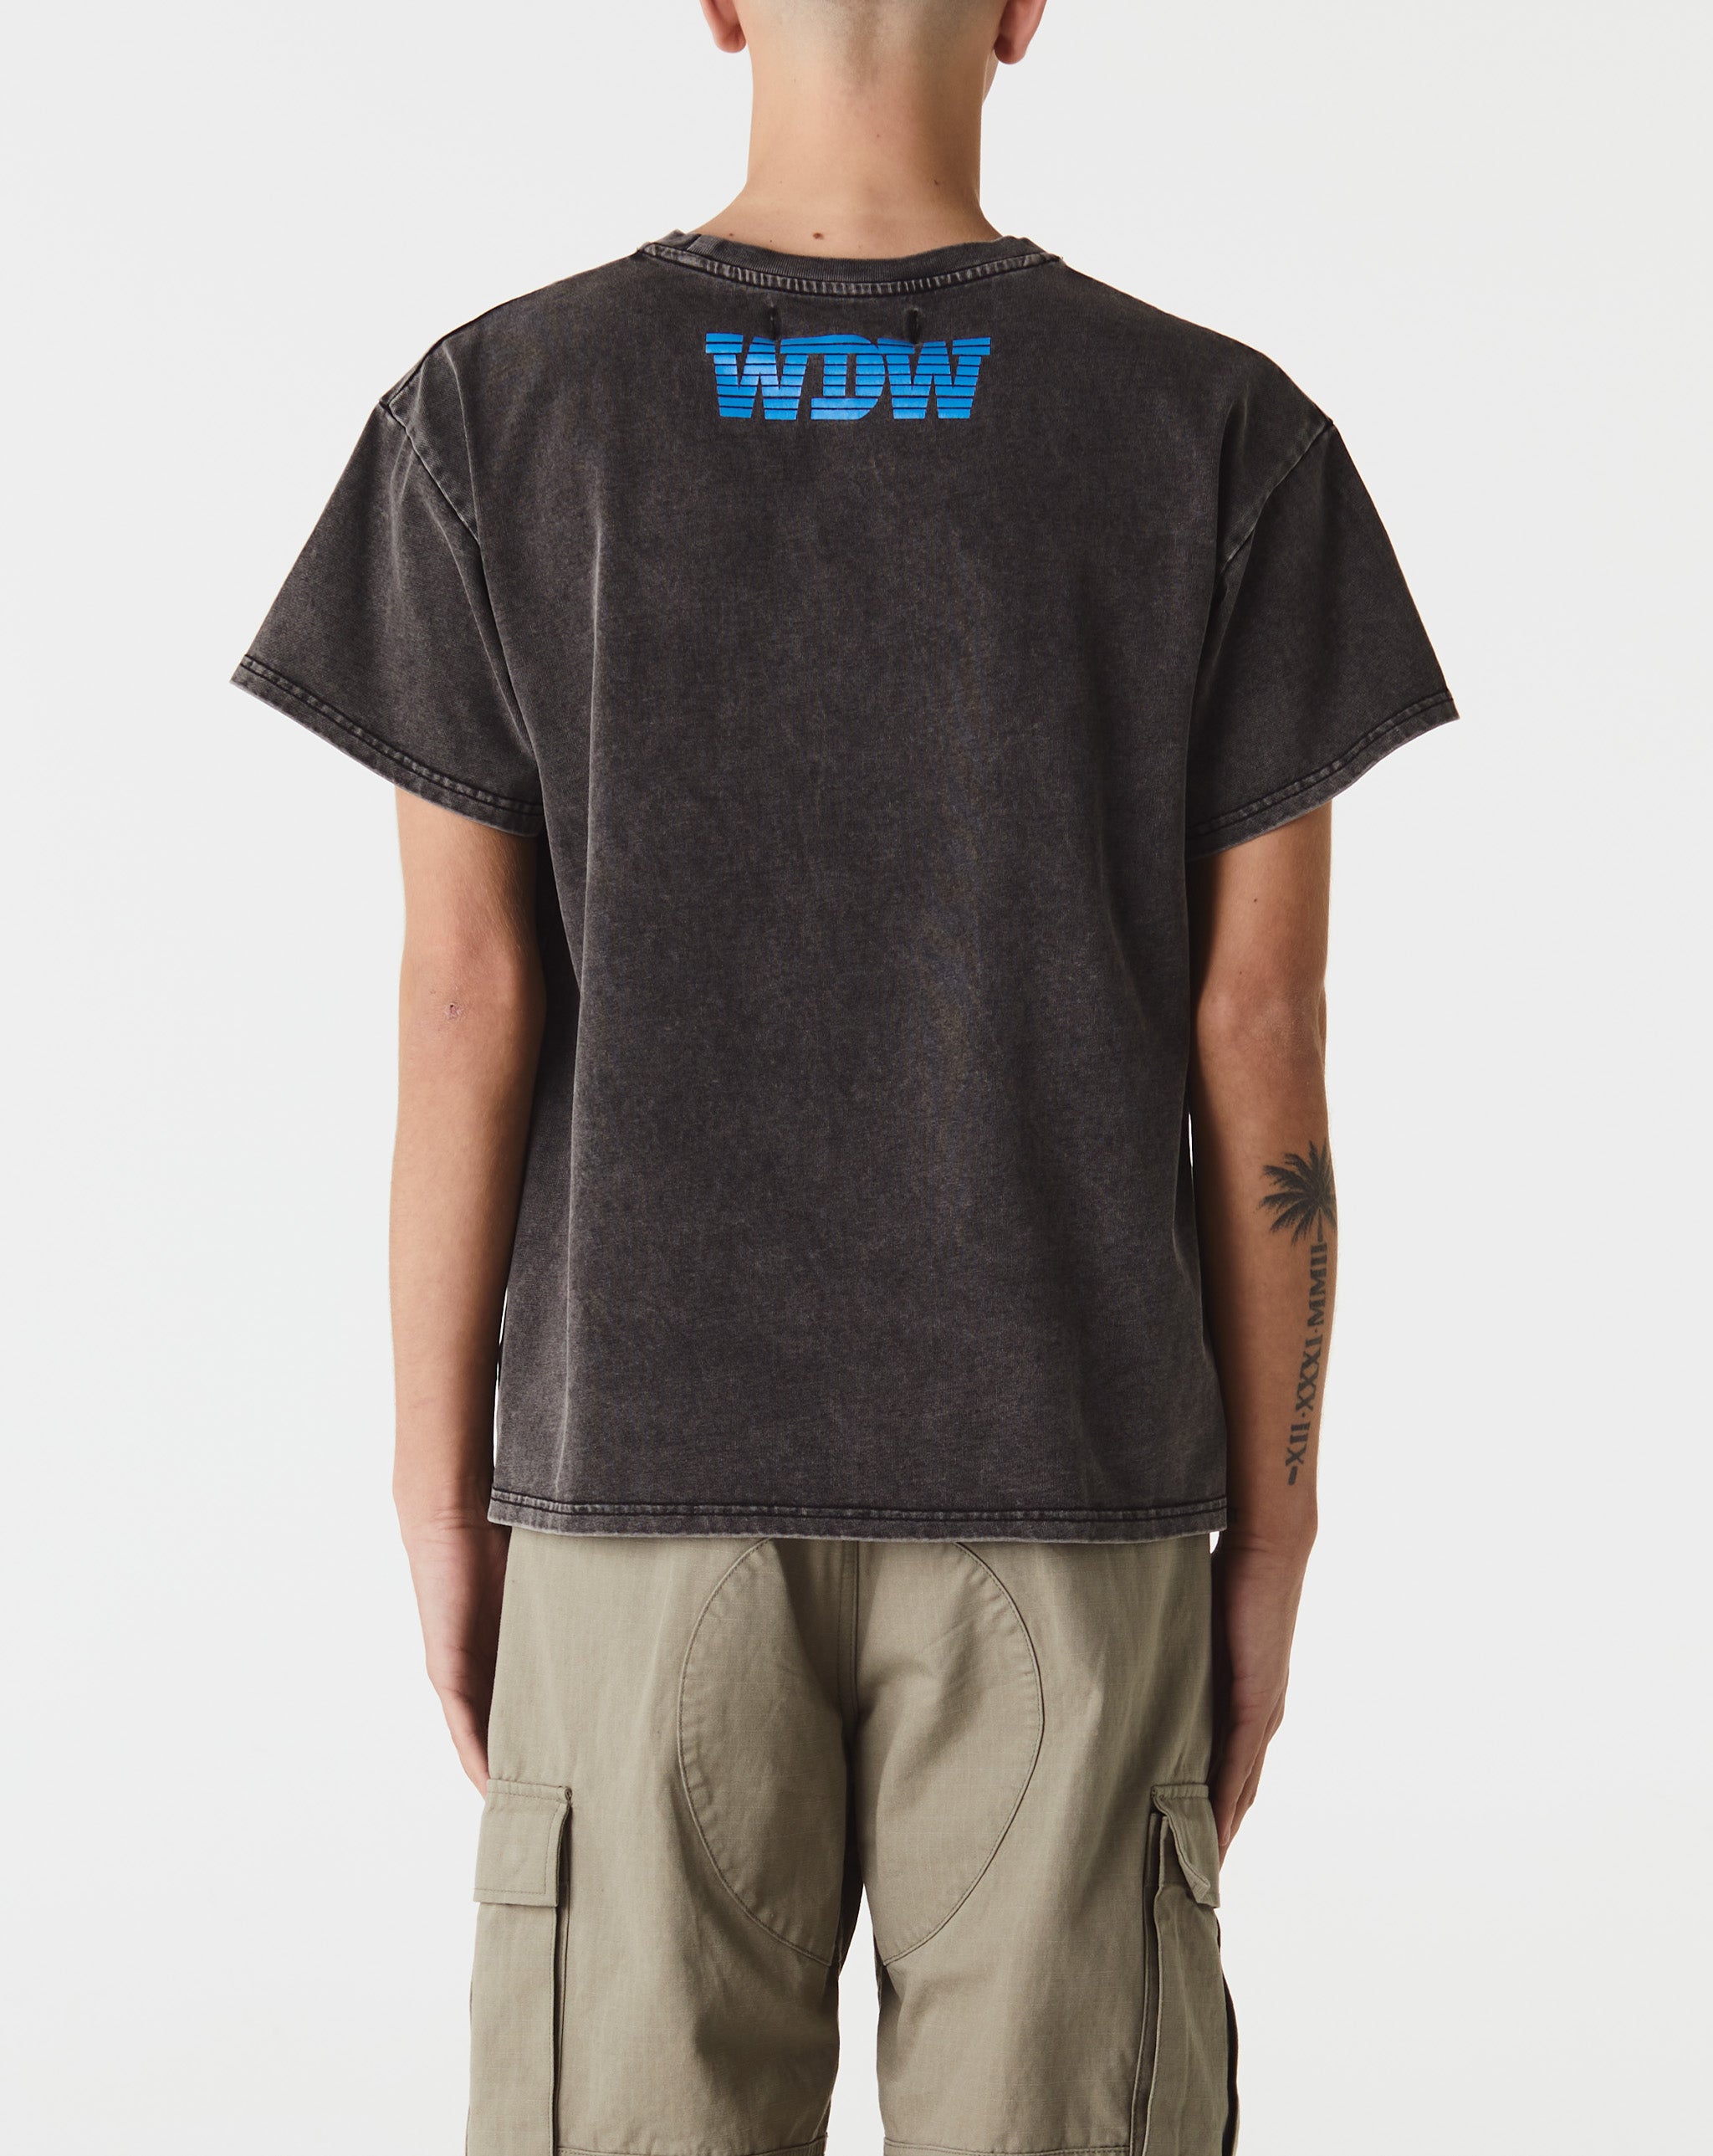 Who Decides War Transition T-Shirt  - Cheap Cerbe Jordan outlet